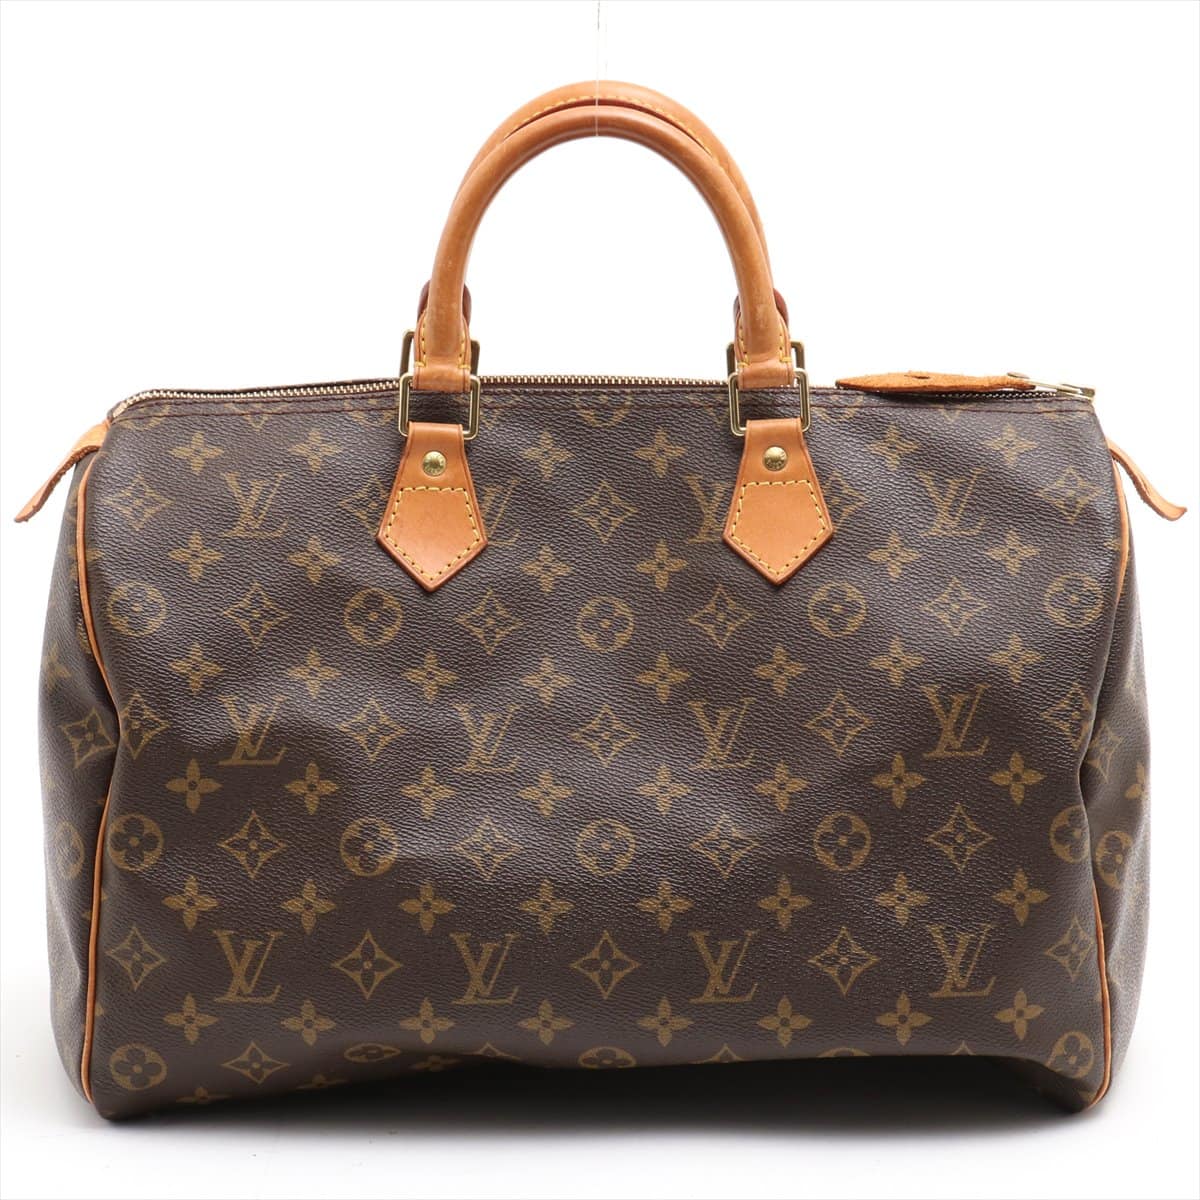 Louis Vuitton Monogram Speedy 35 M41524 Hand bag SP0070?